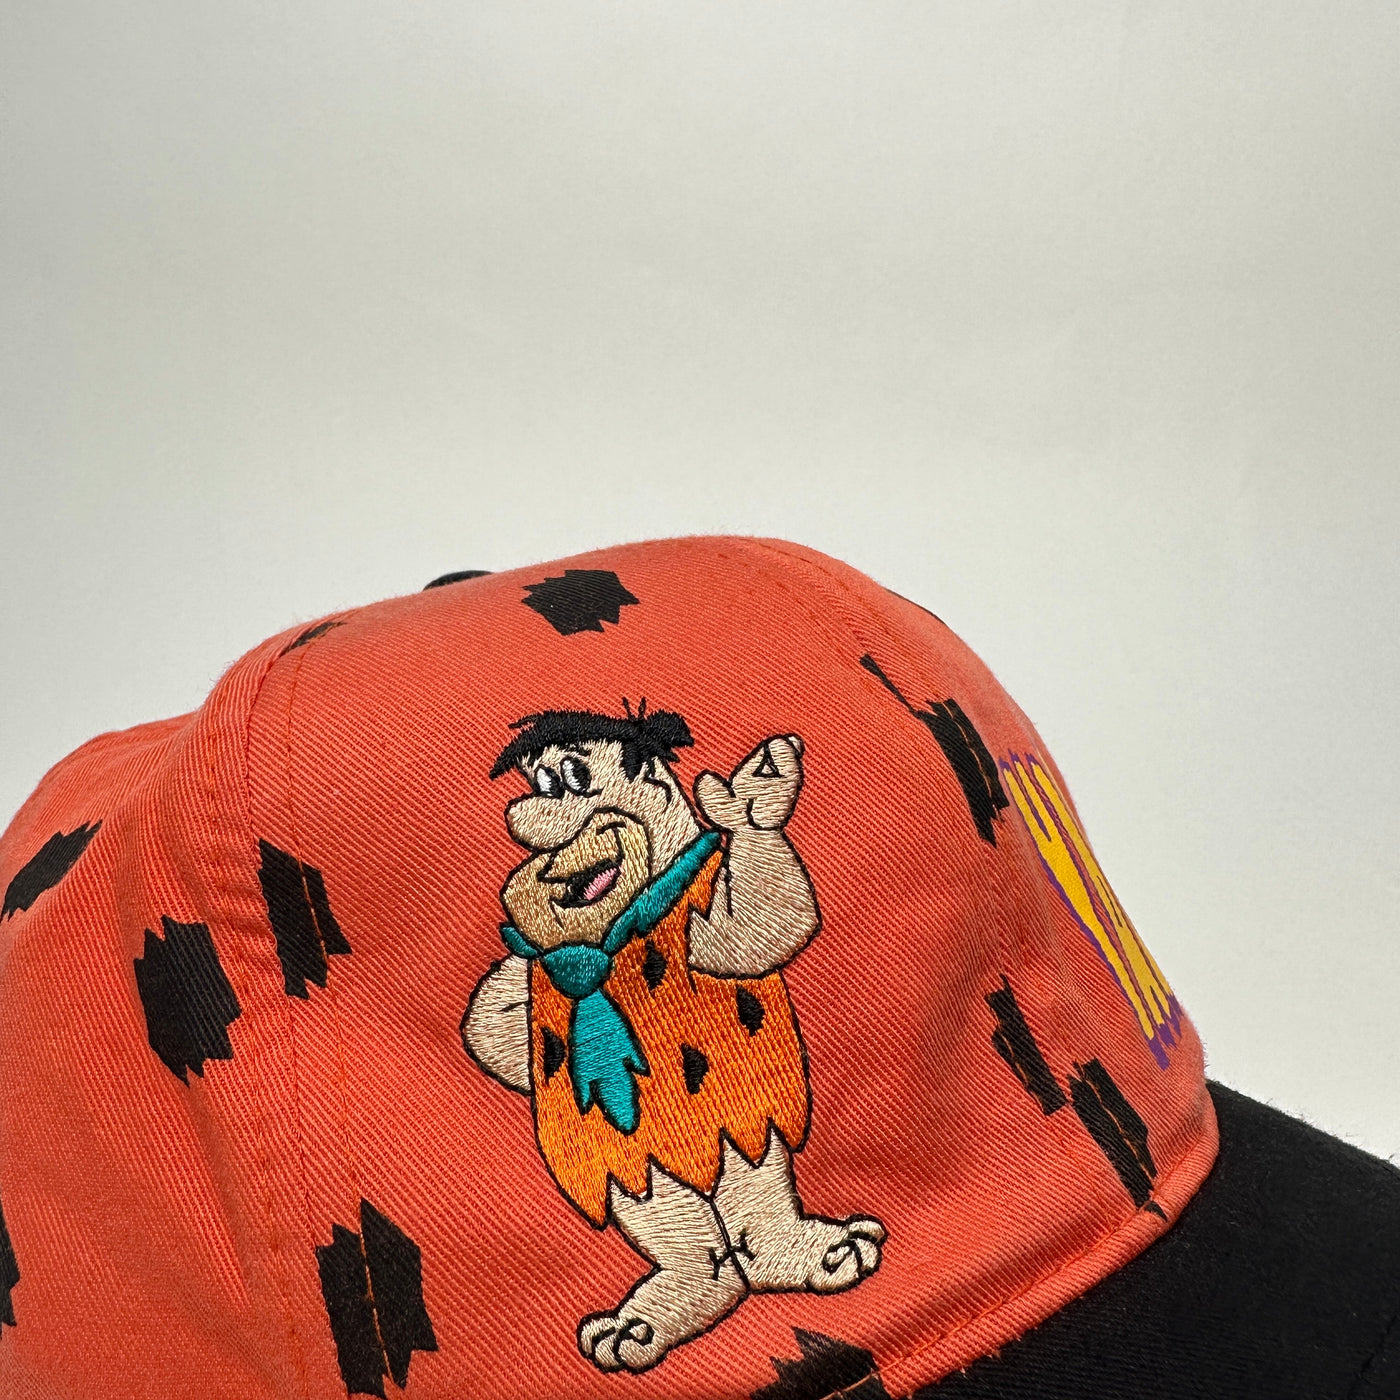 '93 Flinstones "Yabba-Dabba-Doo" Hat